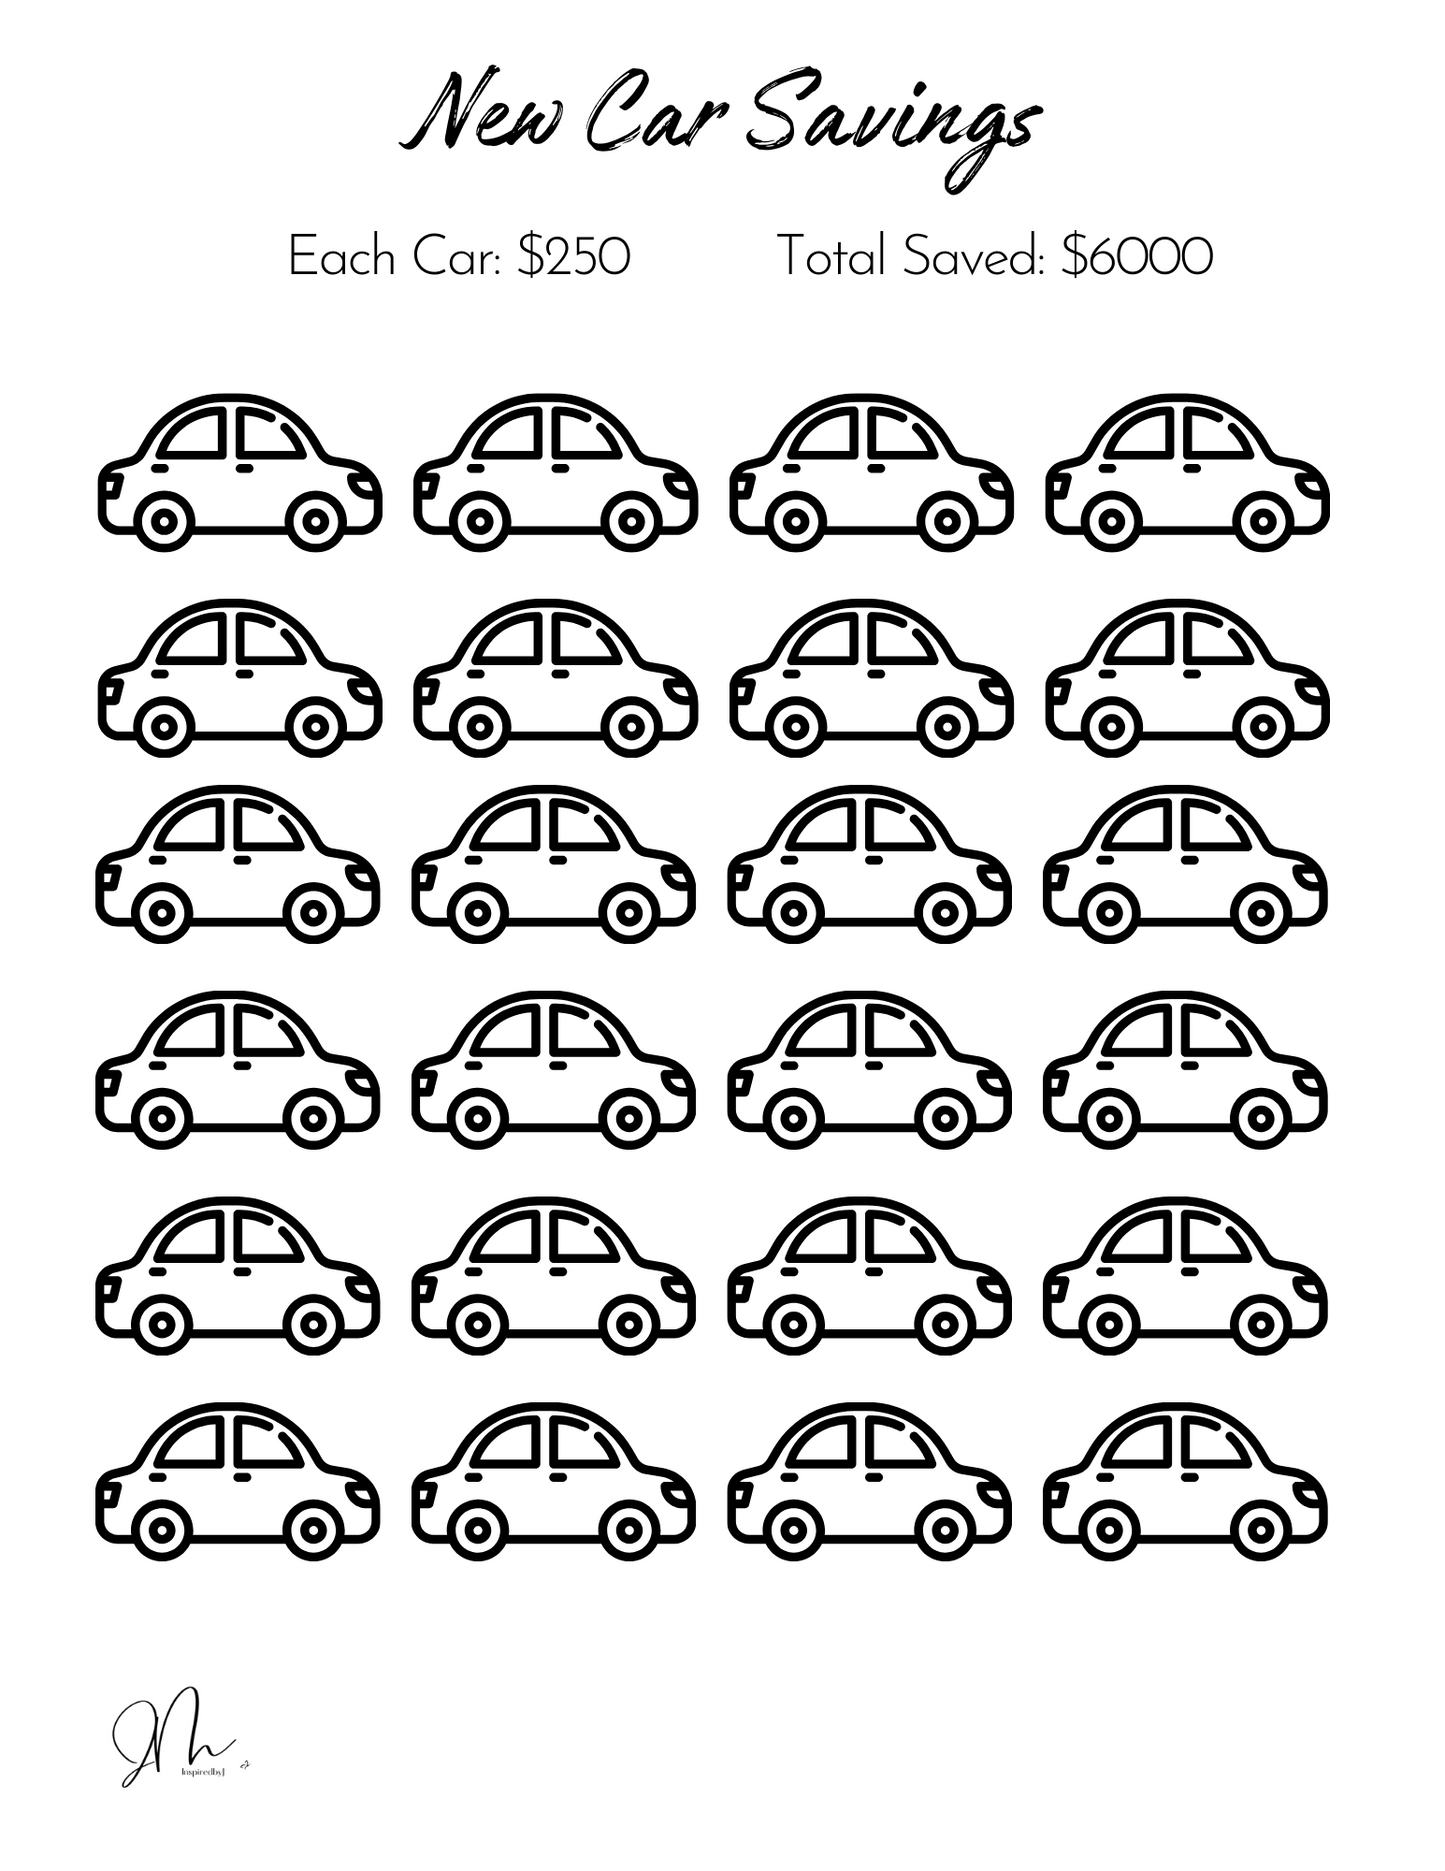 Car Savings Challenges